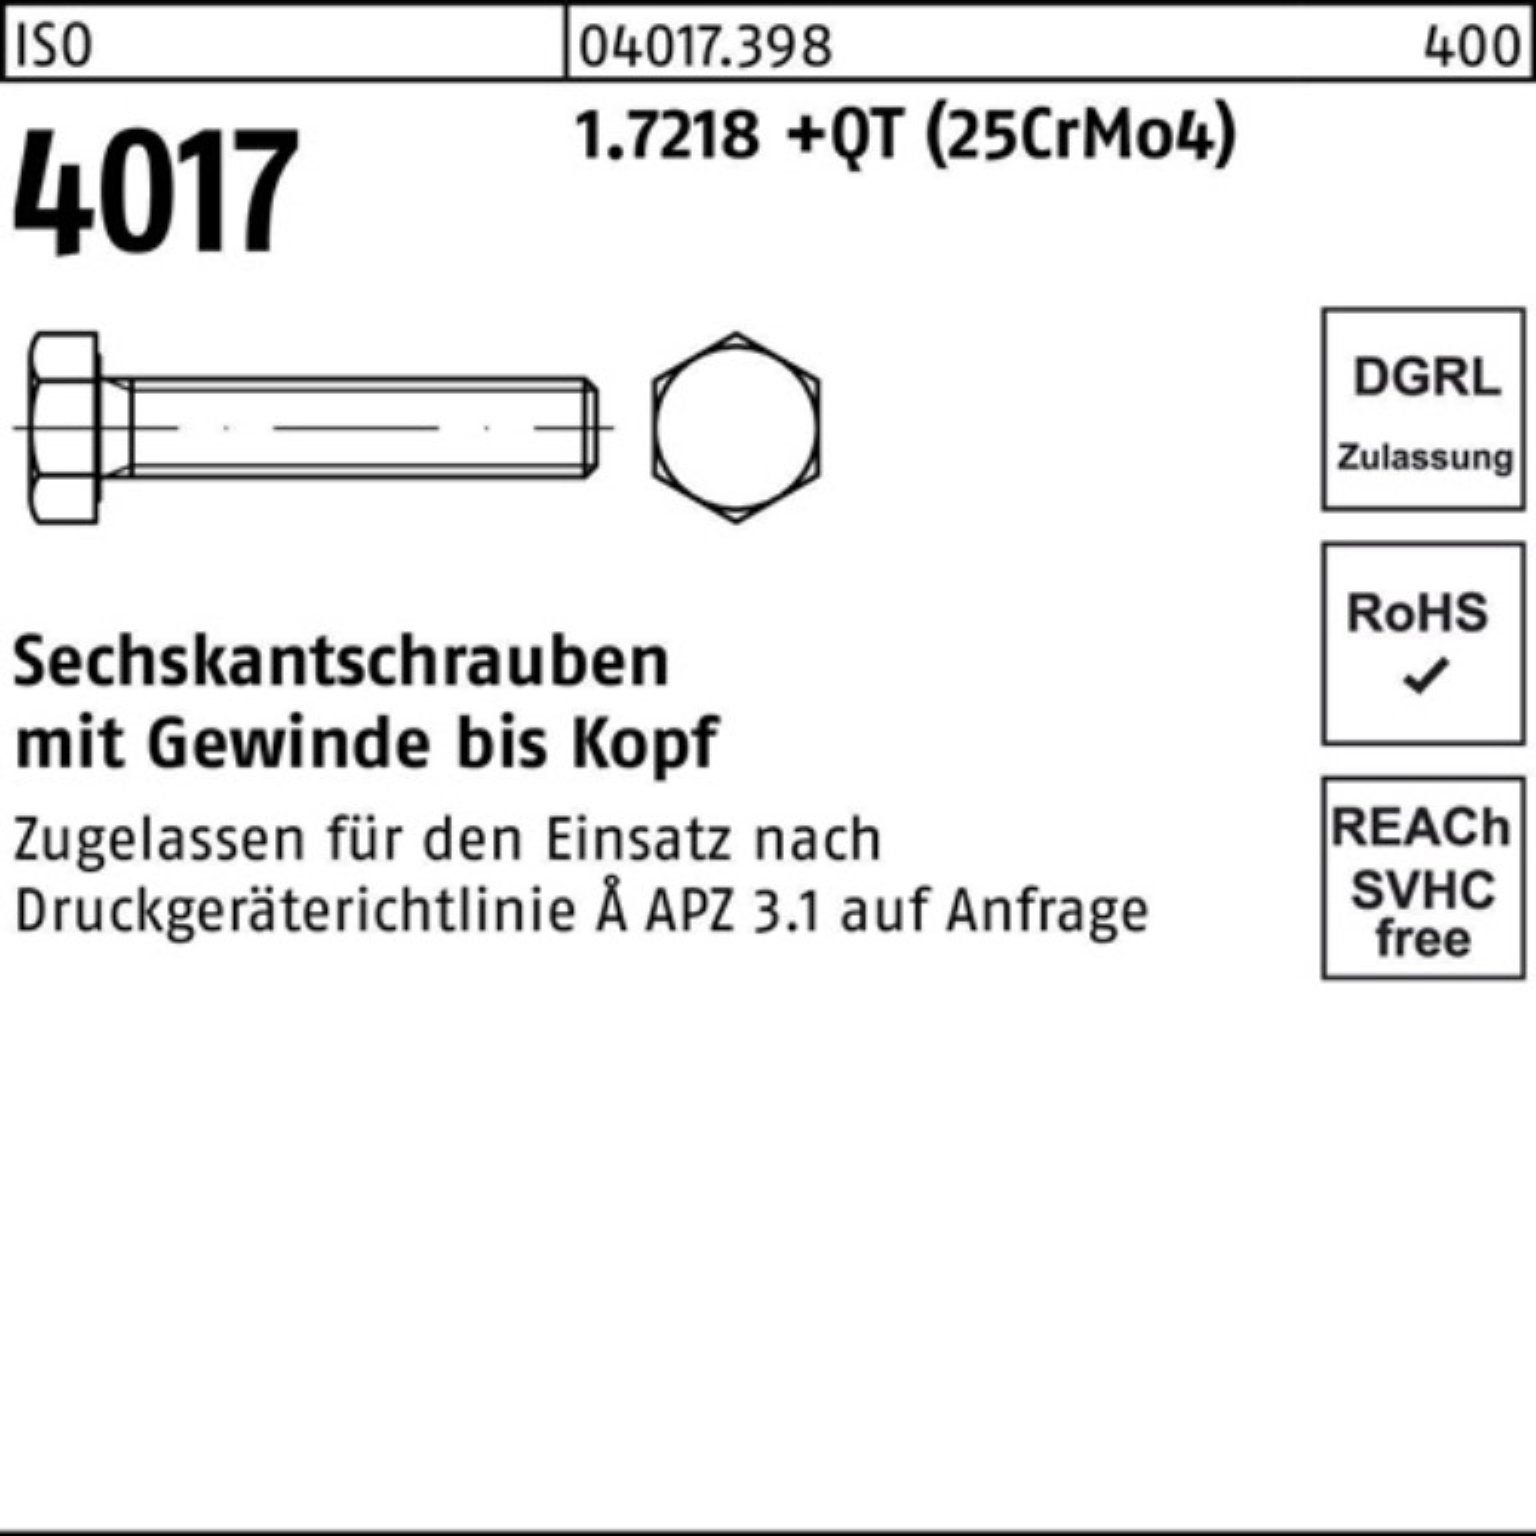 VG ISO 4017 Sechskantschraube M20x Pack 1.7218 +QT Sechskantschraube Bufab 100er 200 (25CrMo4)